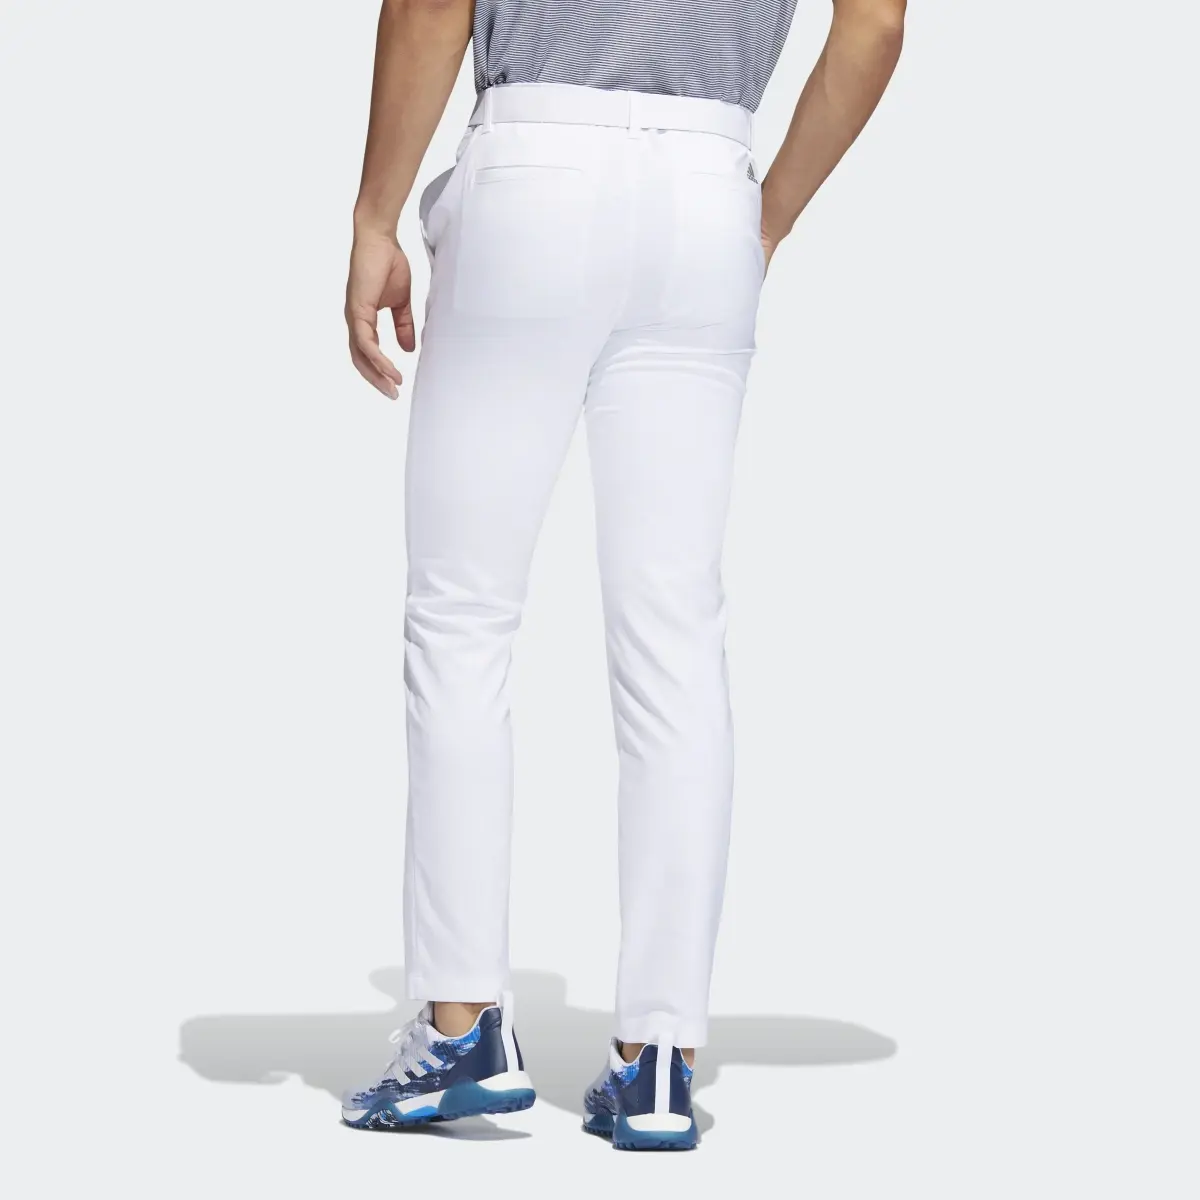 Adidas Pants Ultimate365 Pierna Cónica. 2